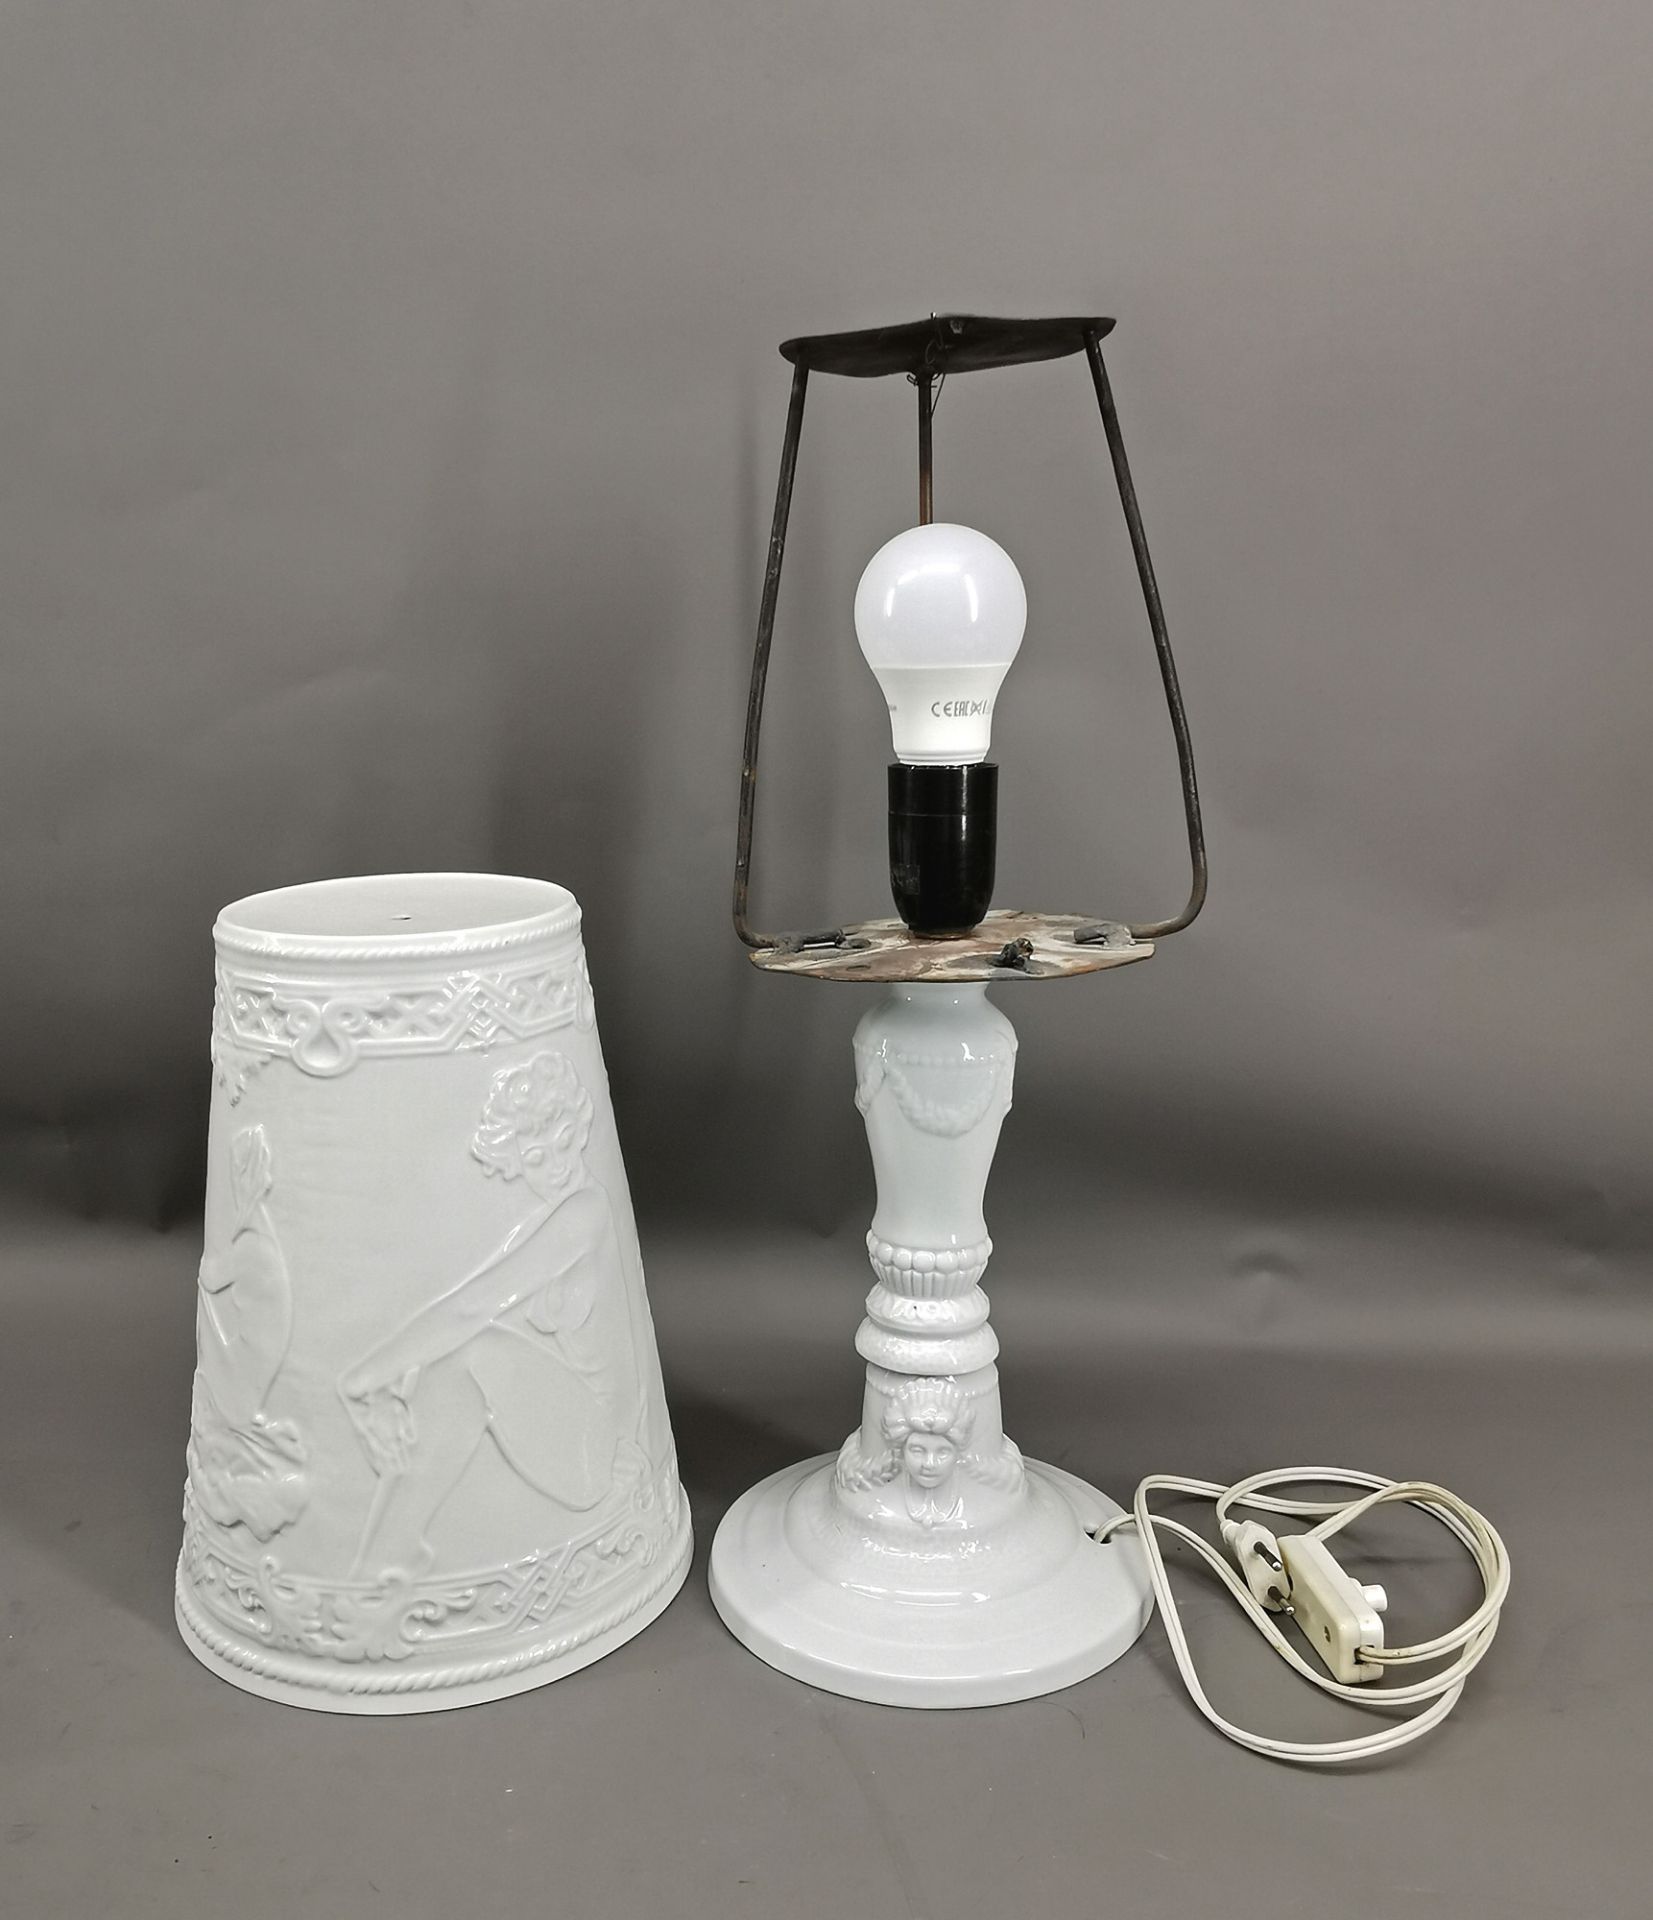 Lithophanie-Lampe Thüringen Frauenakt - Image 4 of 4